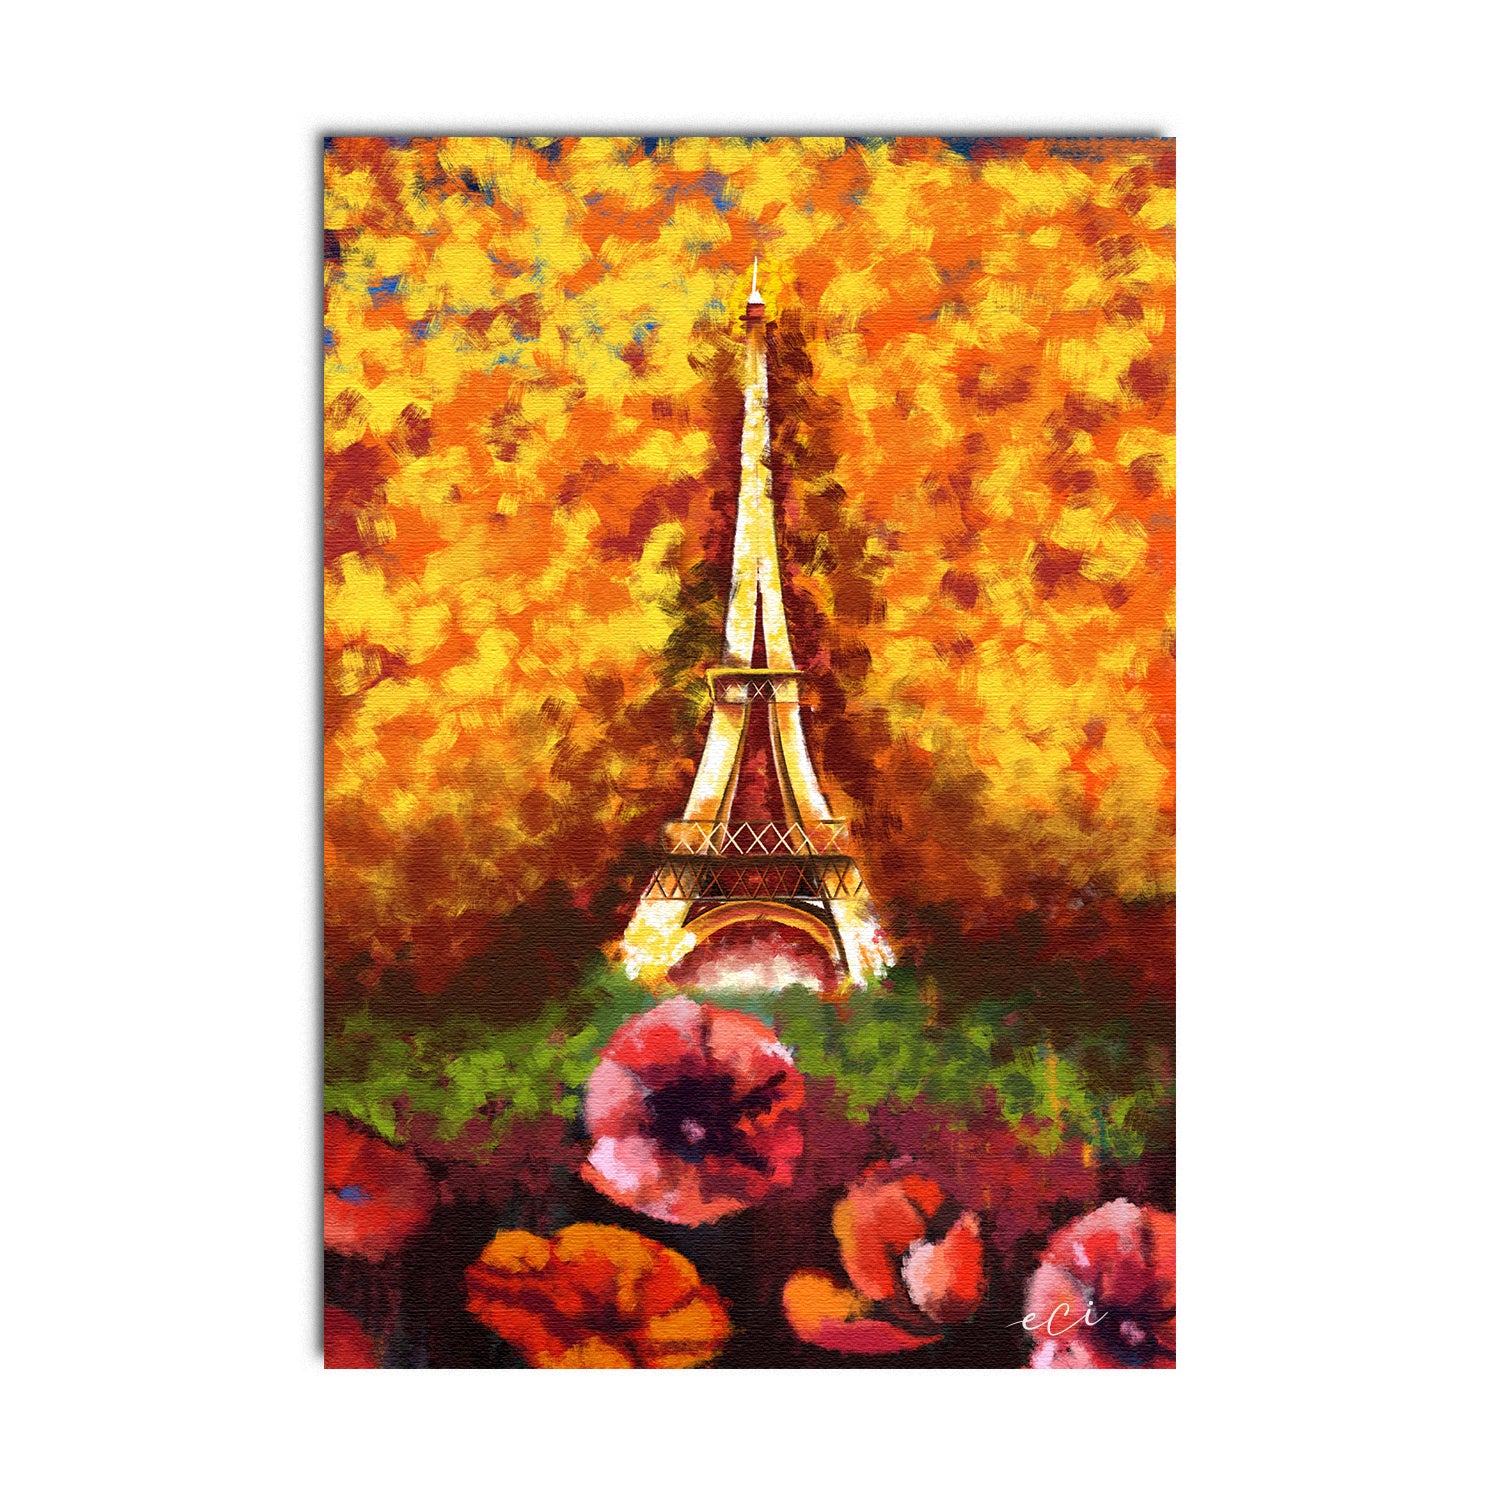 Paris Eiffel Tower View In Autumn Season Digital Printed Canvas Wall Painting 2